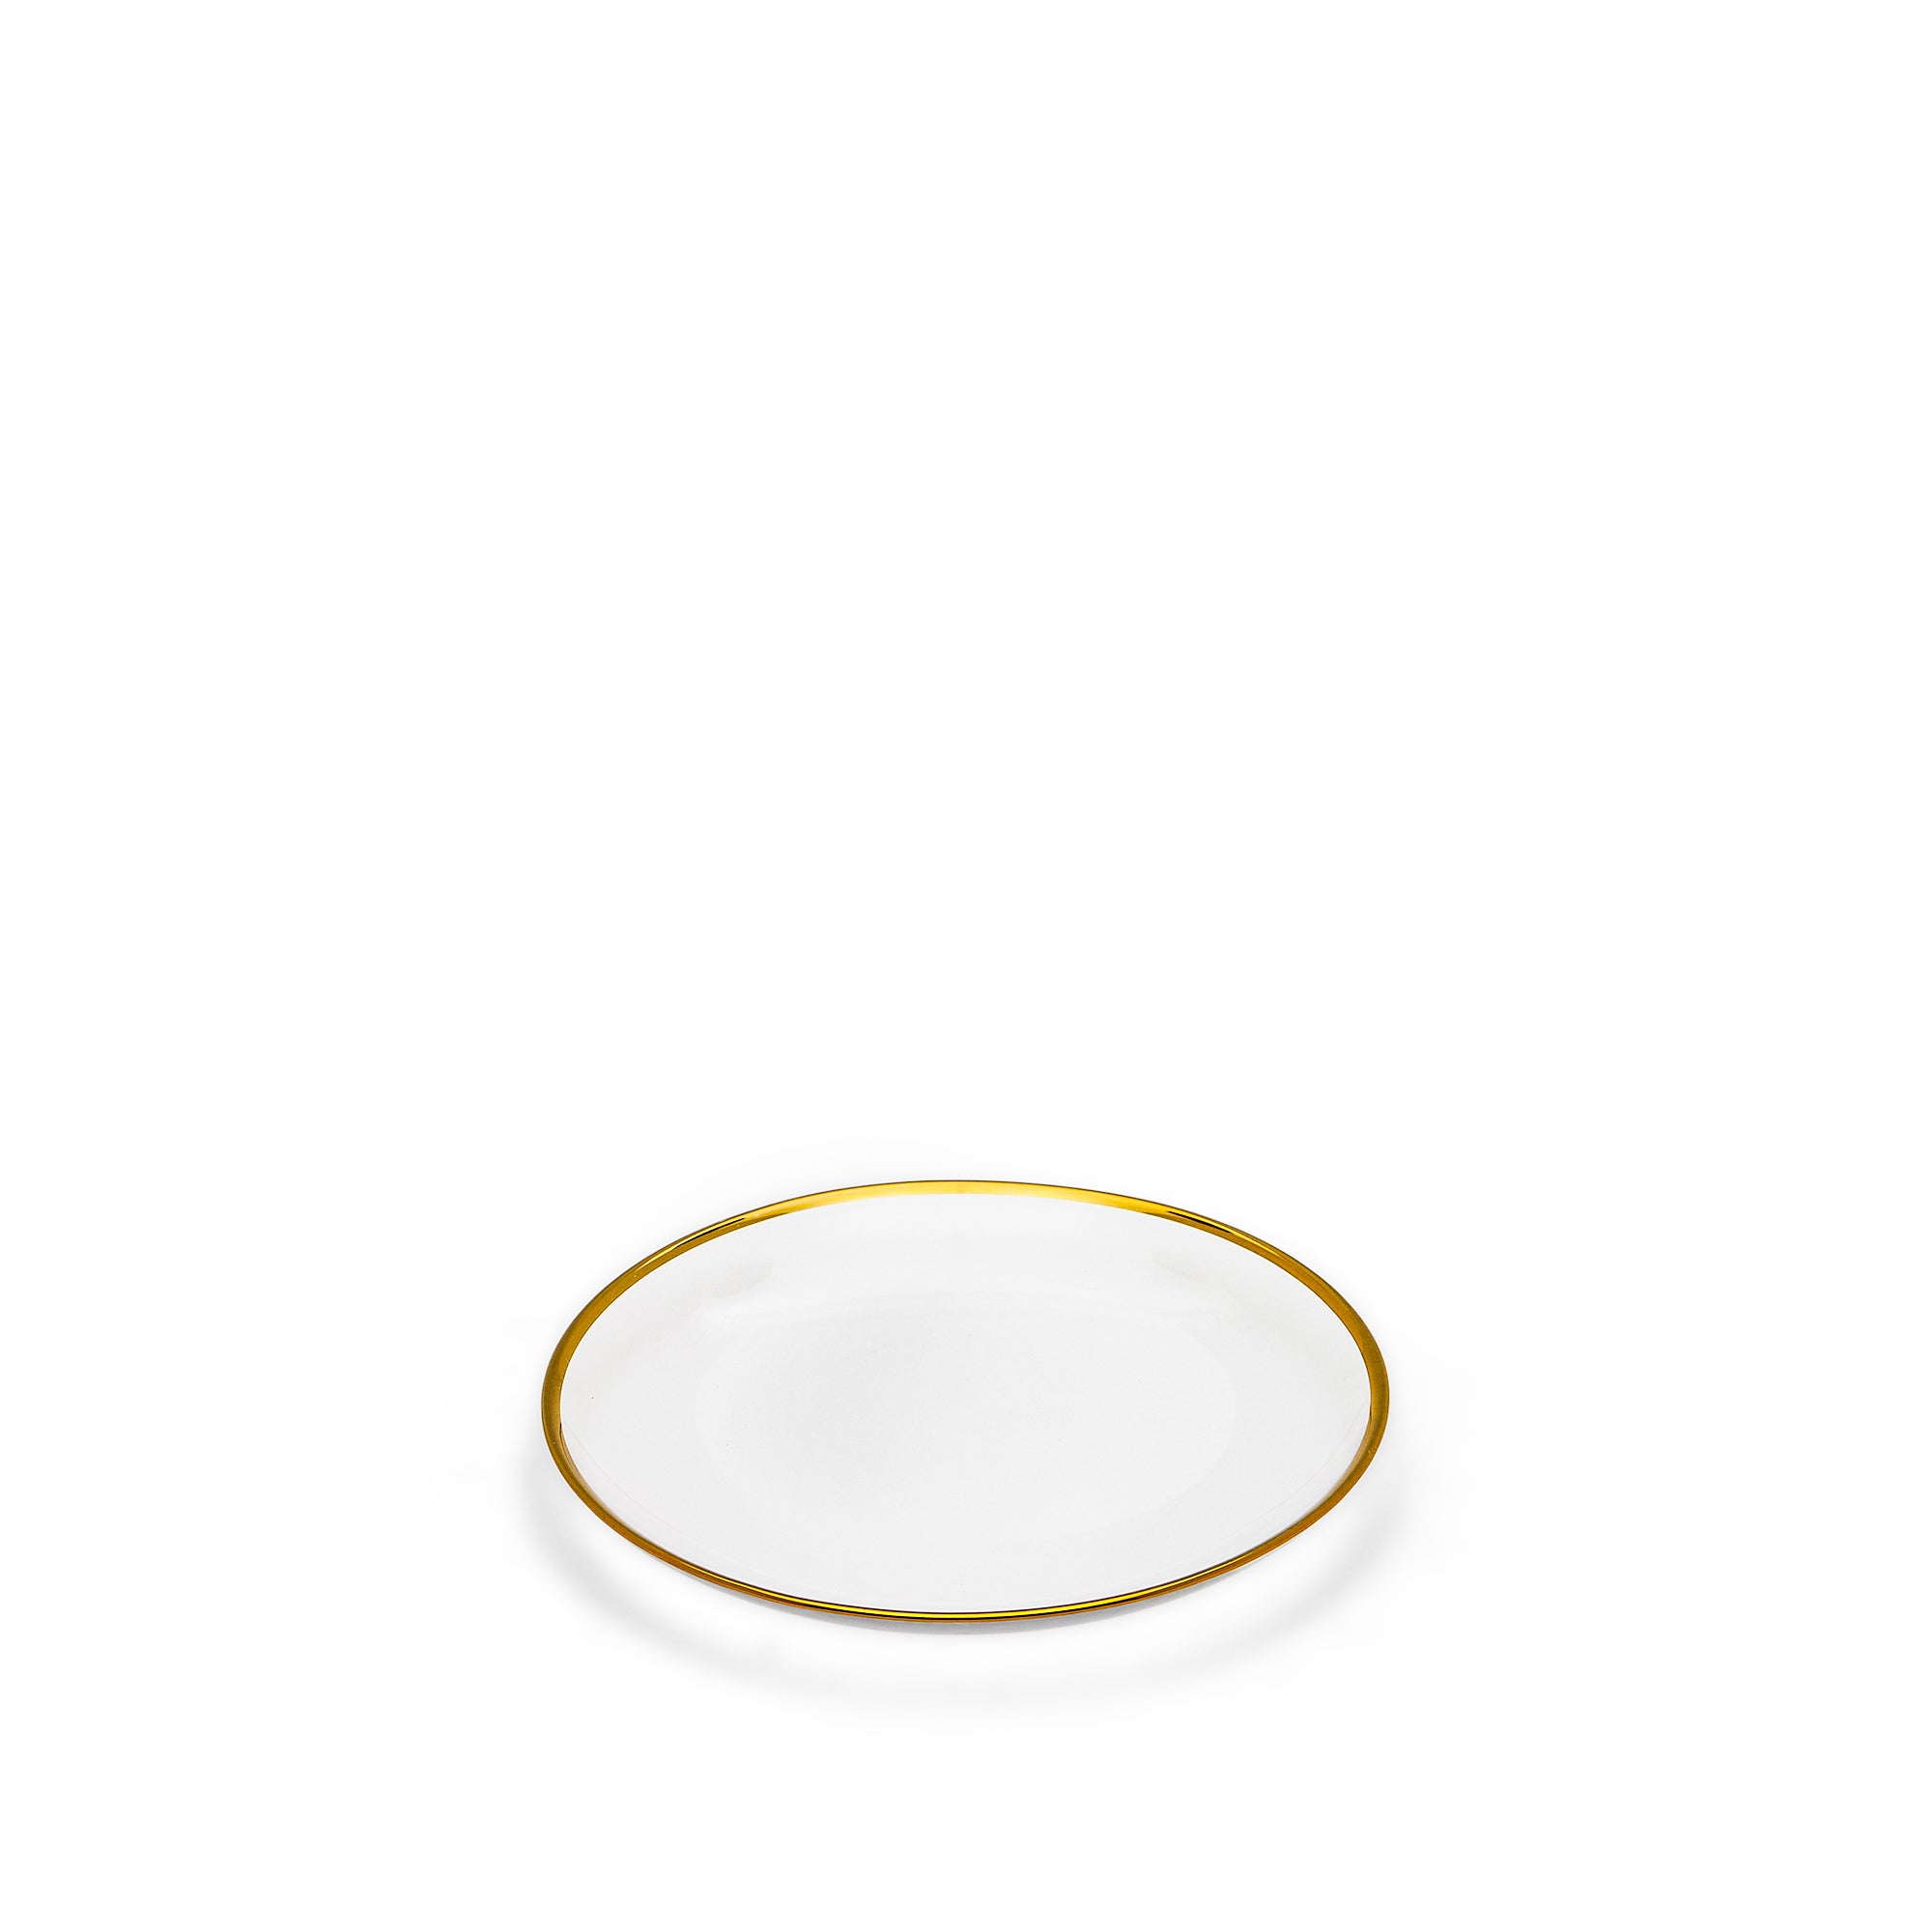 Nelie glass dessert plate with golden edges